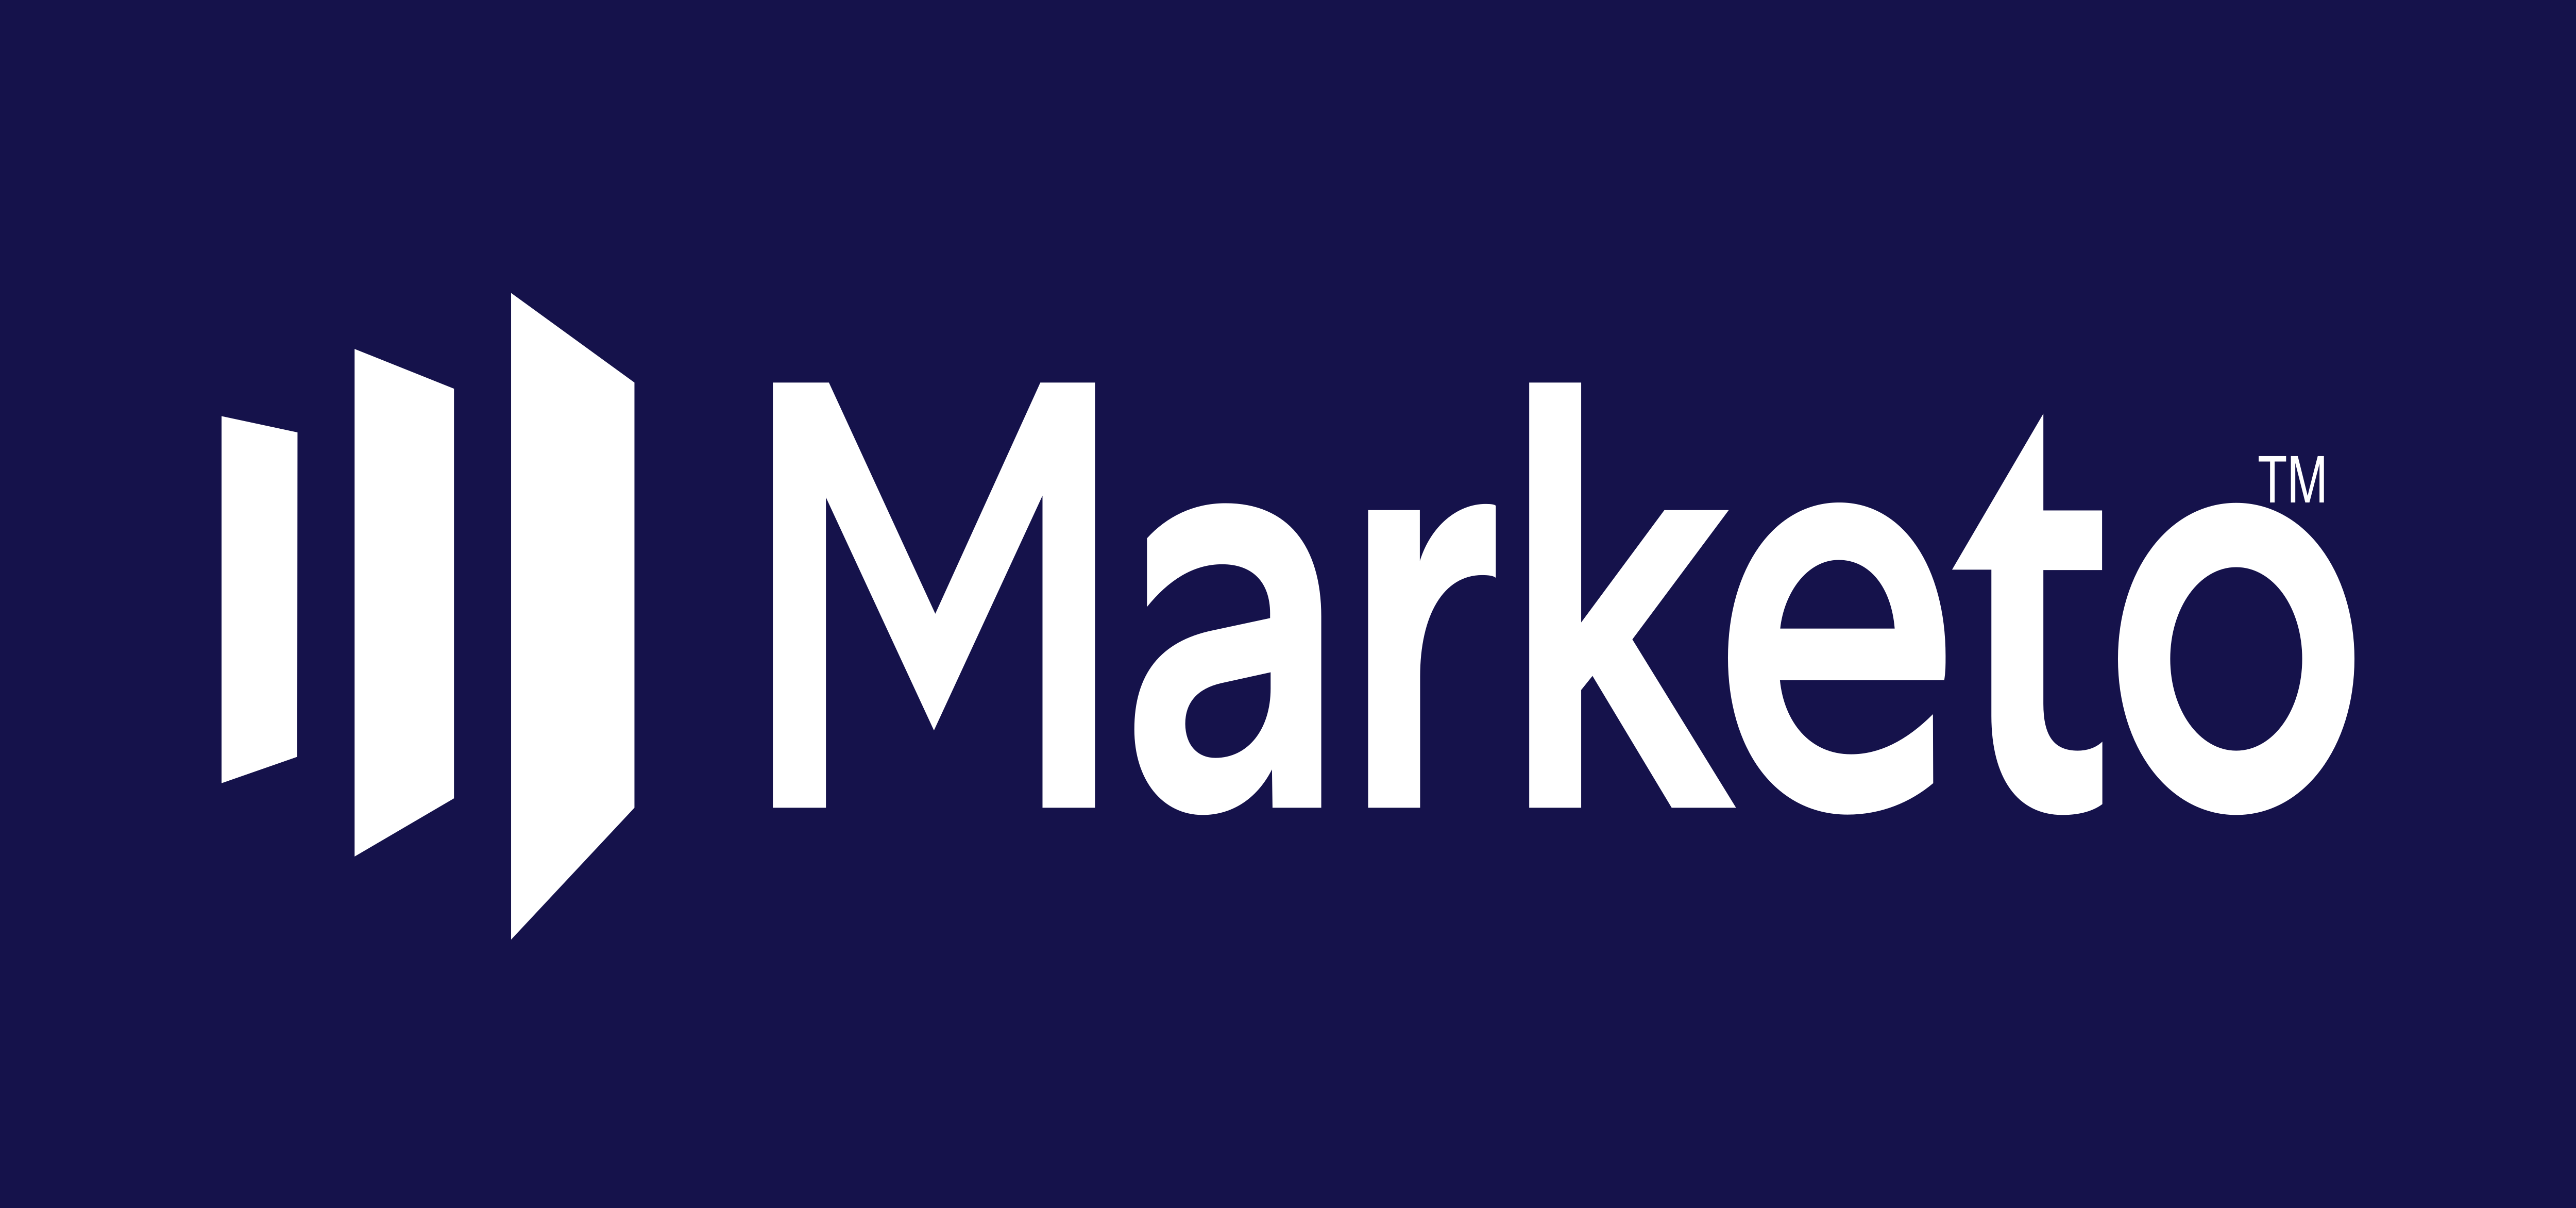 marketo-logos-download